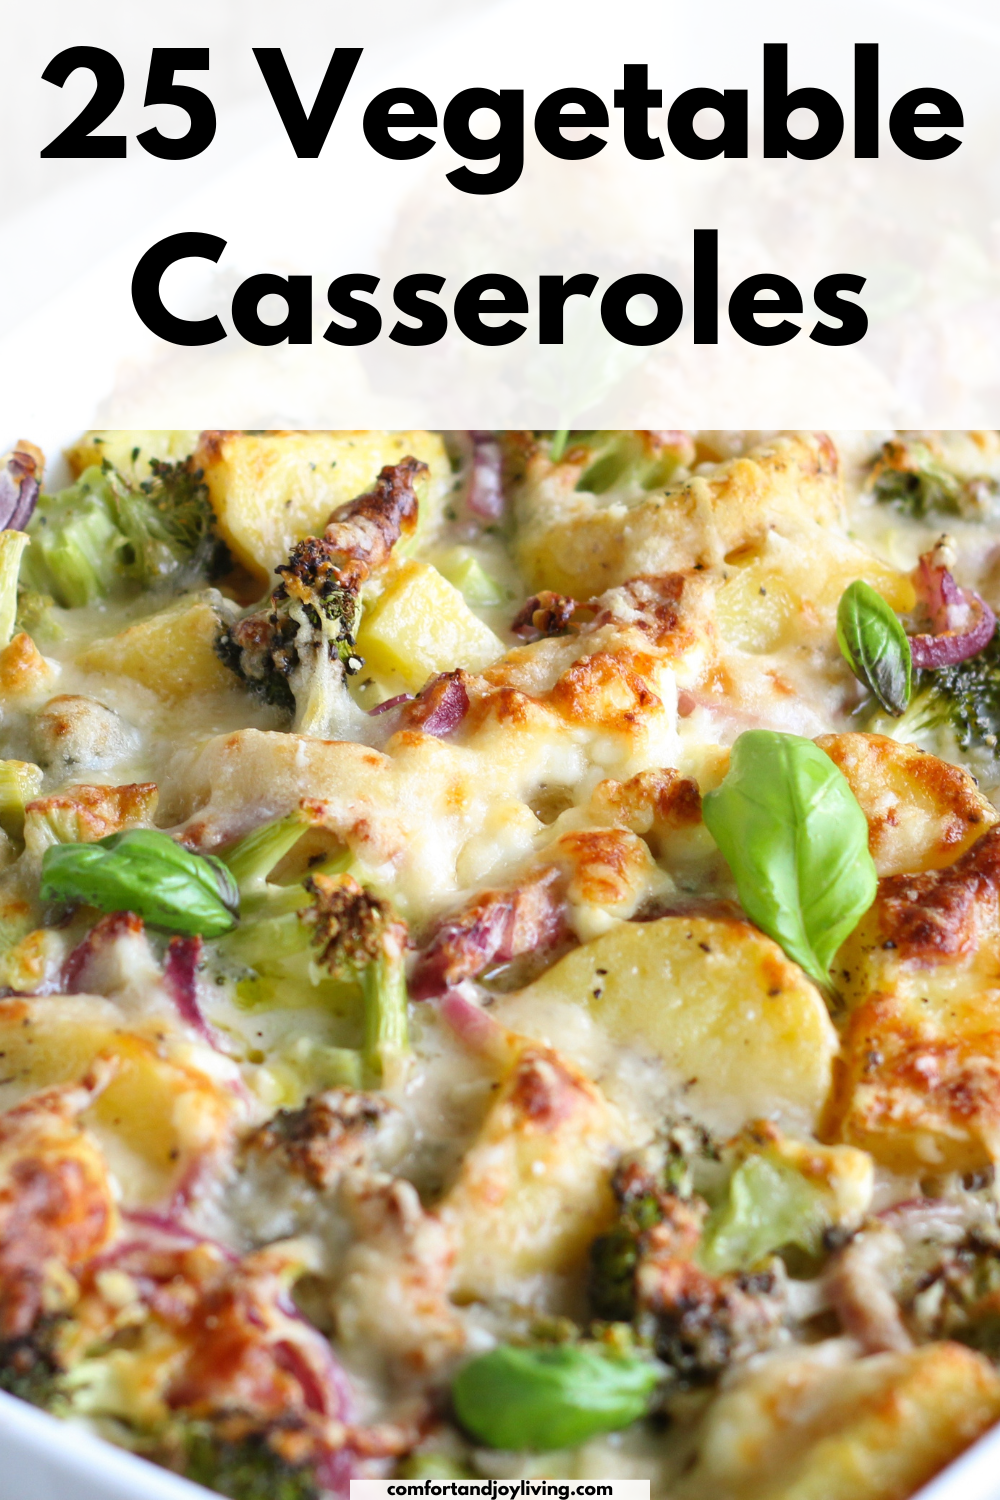 25 Vegetable Casseroles